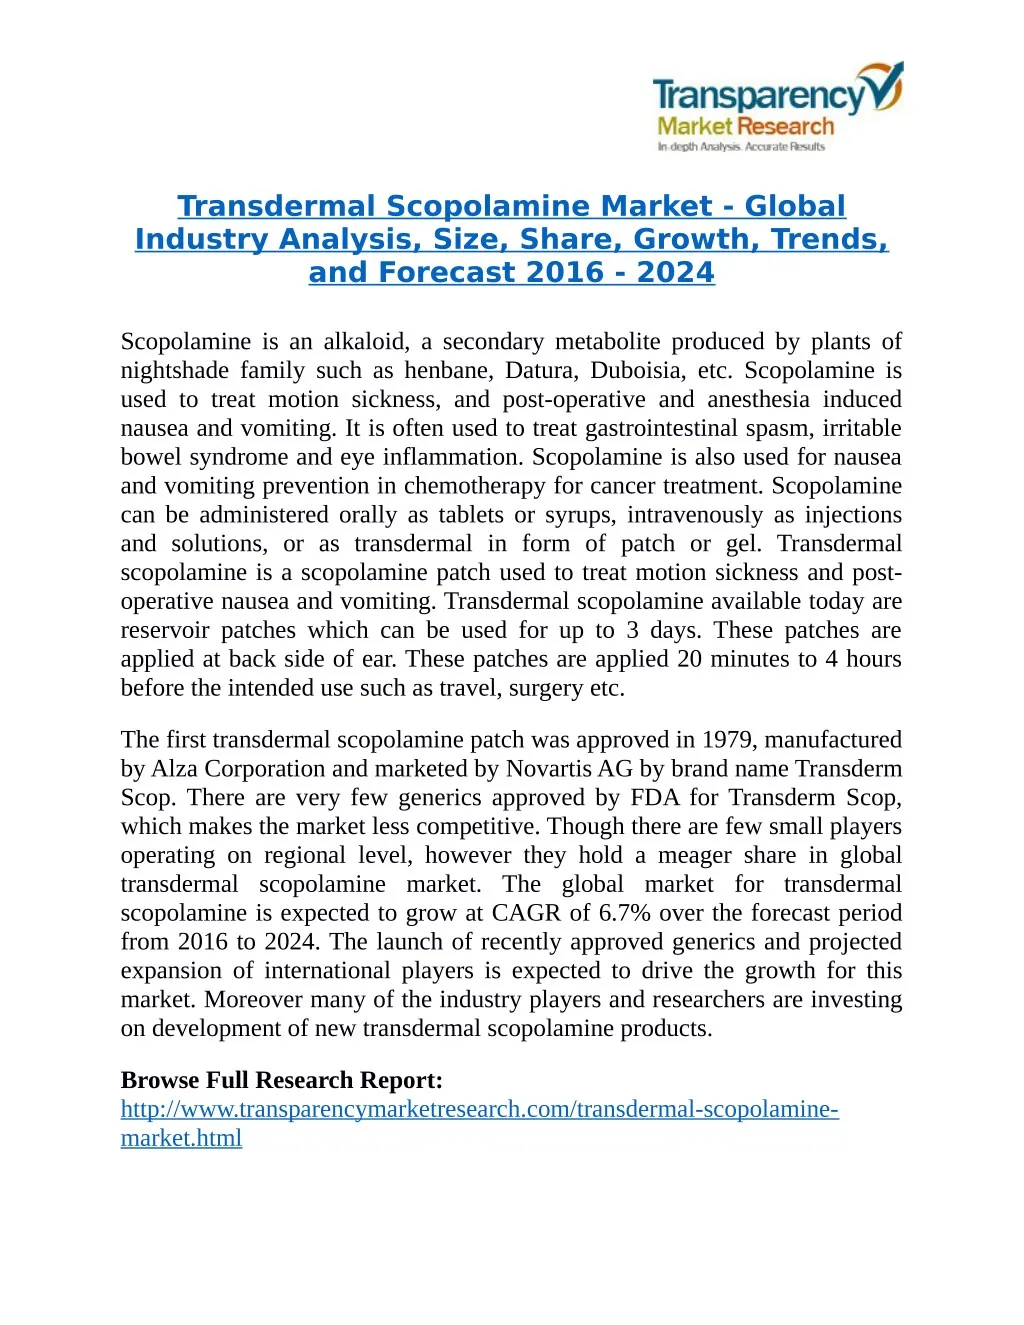 transdermal scopolamine market global industry